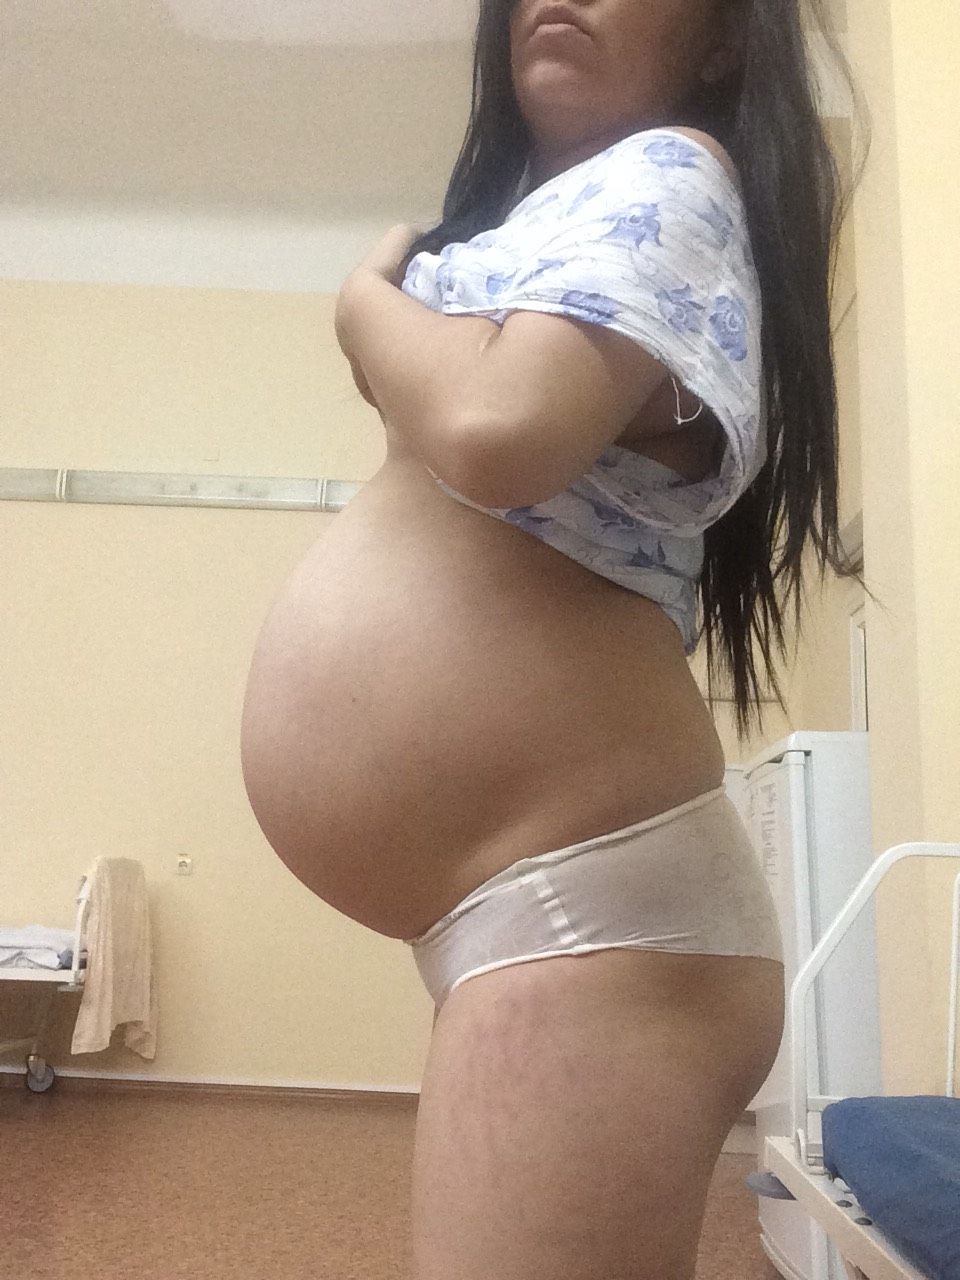 напрягается живот при беременности во время оргазма фото 44